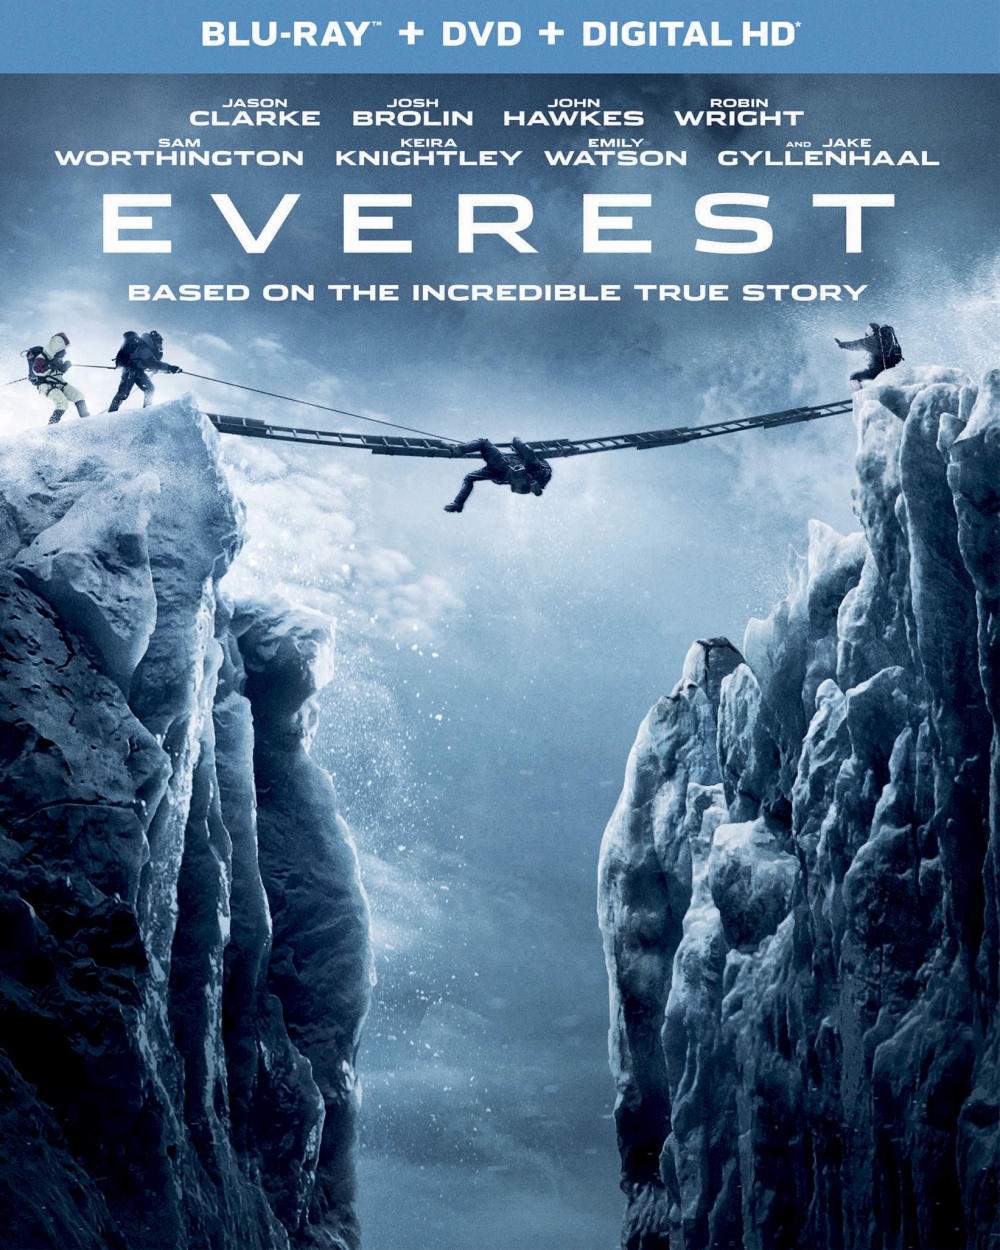 Everest Blu-ray box art